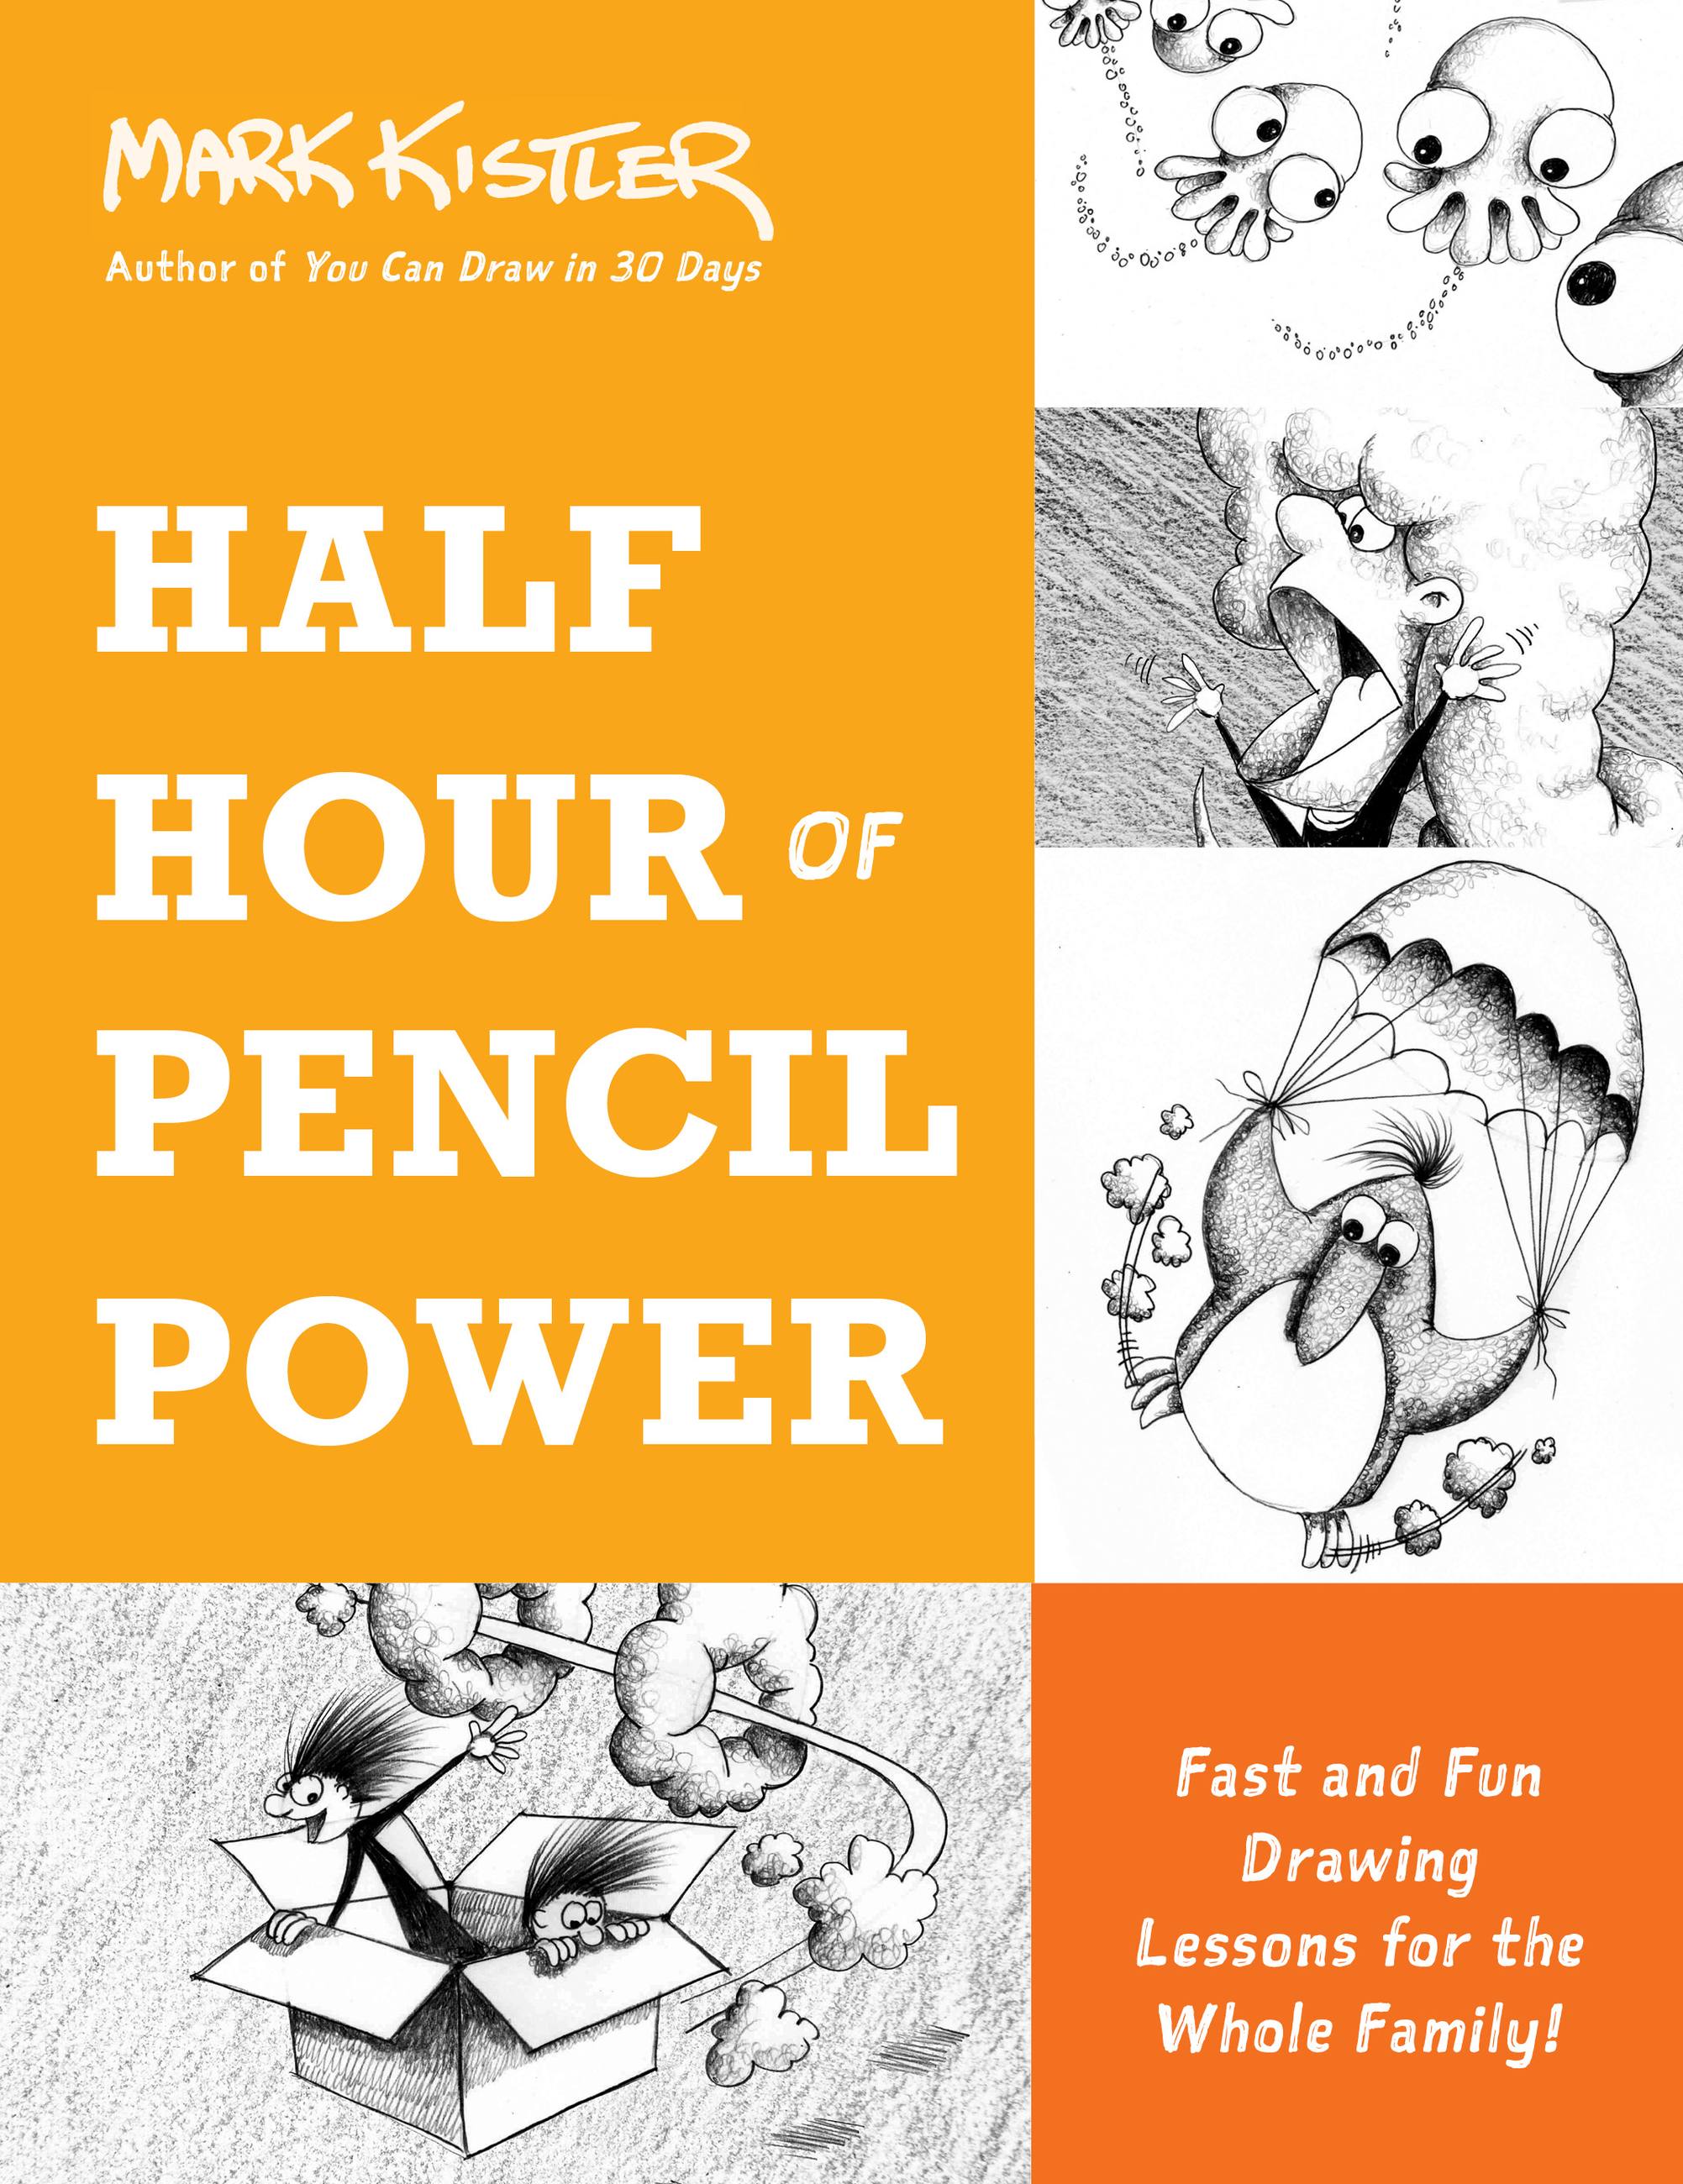 Half Hour of Pencil Power by Mark Kistler